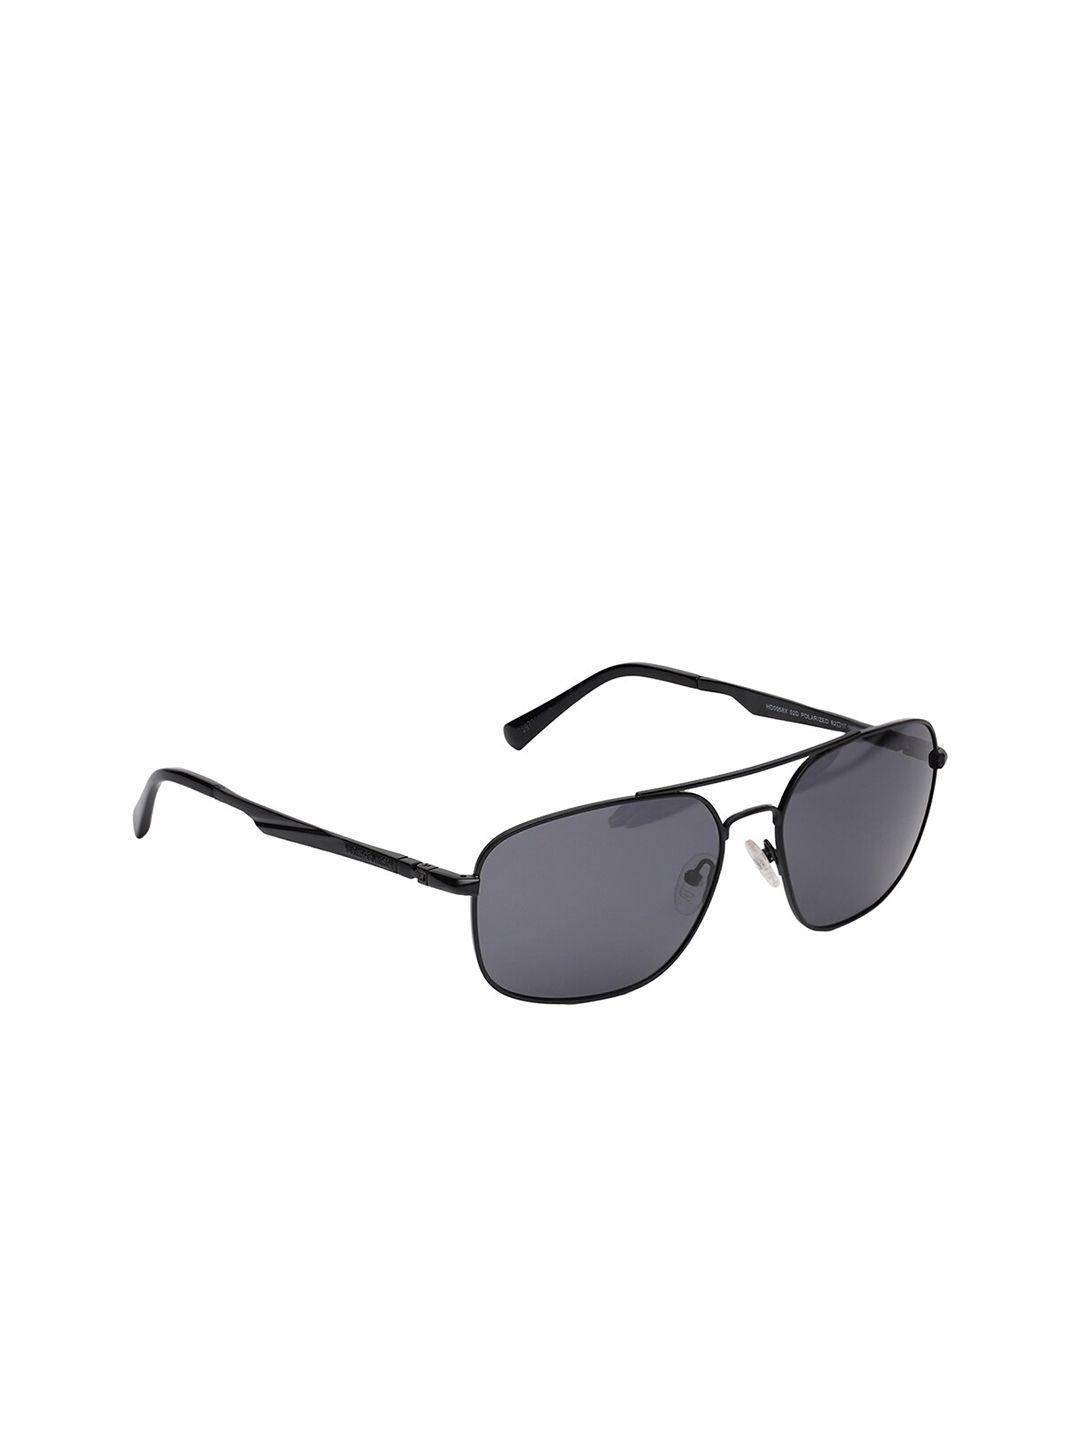 harley-davidson men aviator sunglasses with uv protected lens